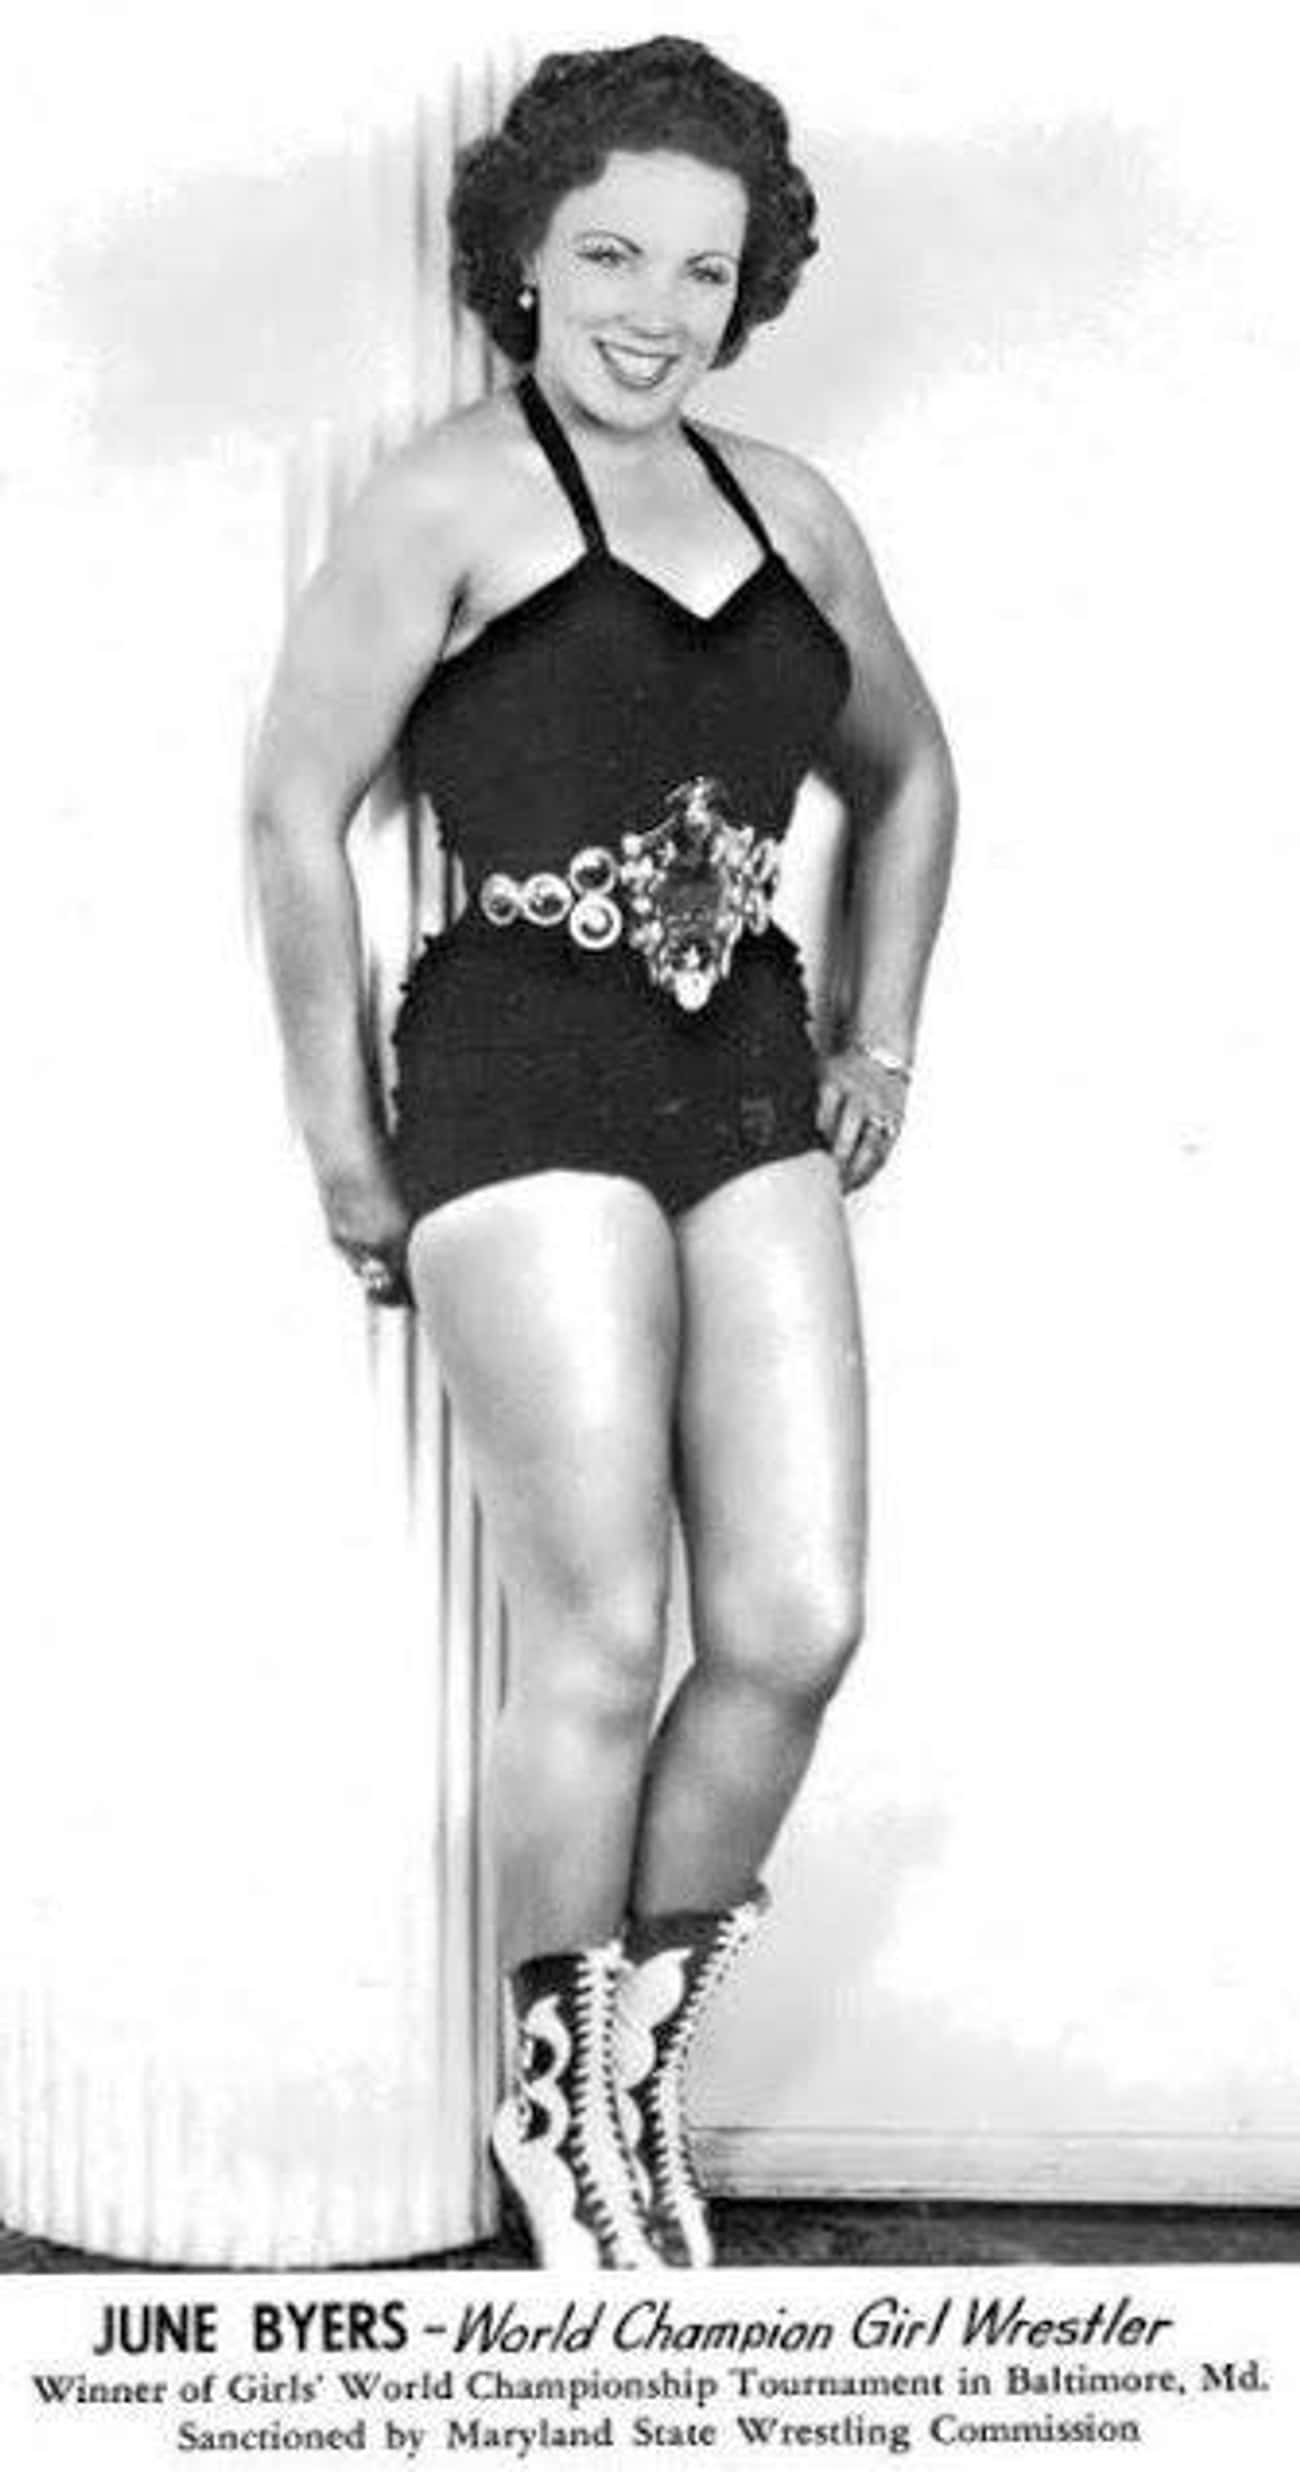 1940s: June Byers